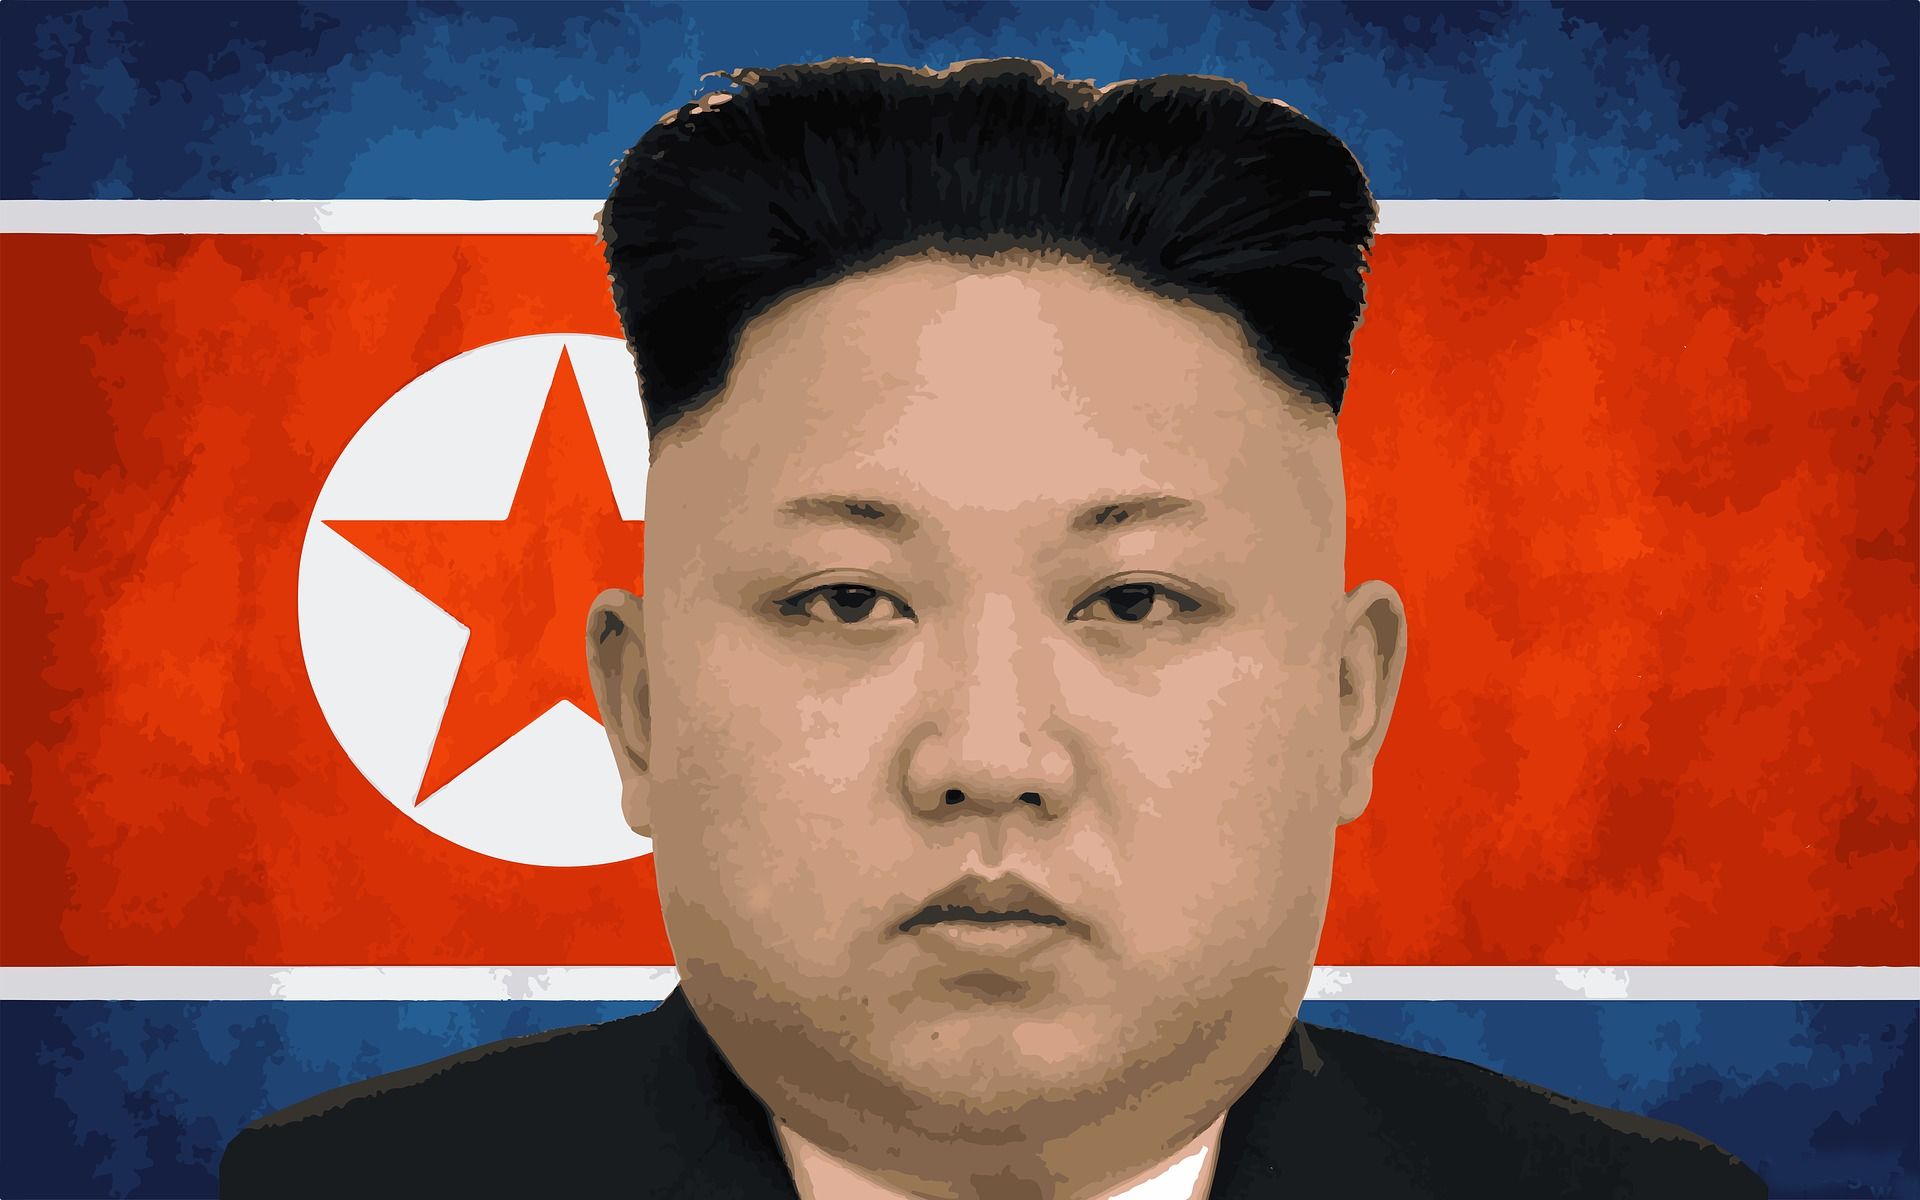 Korea Utara semakin mempertegas sikap anti Barat nya dengan melanggar warganya bergaya seperti orang-orang di negara ‘kapitalis’.